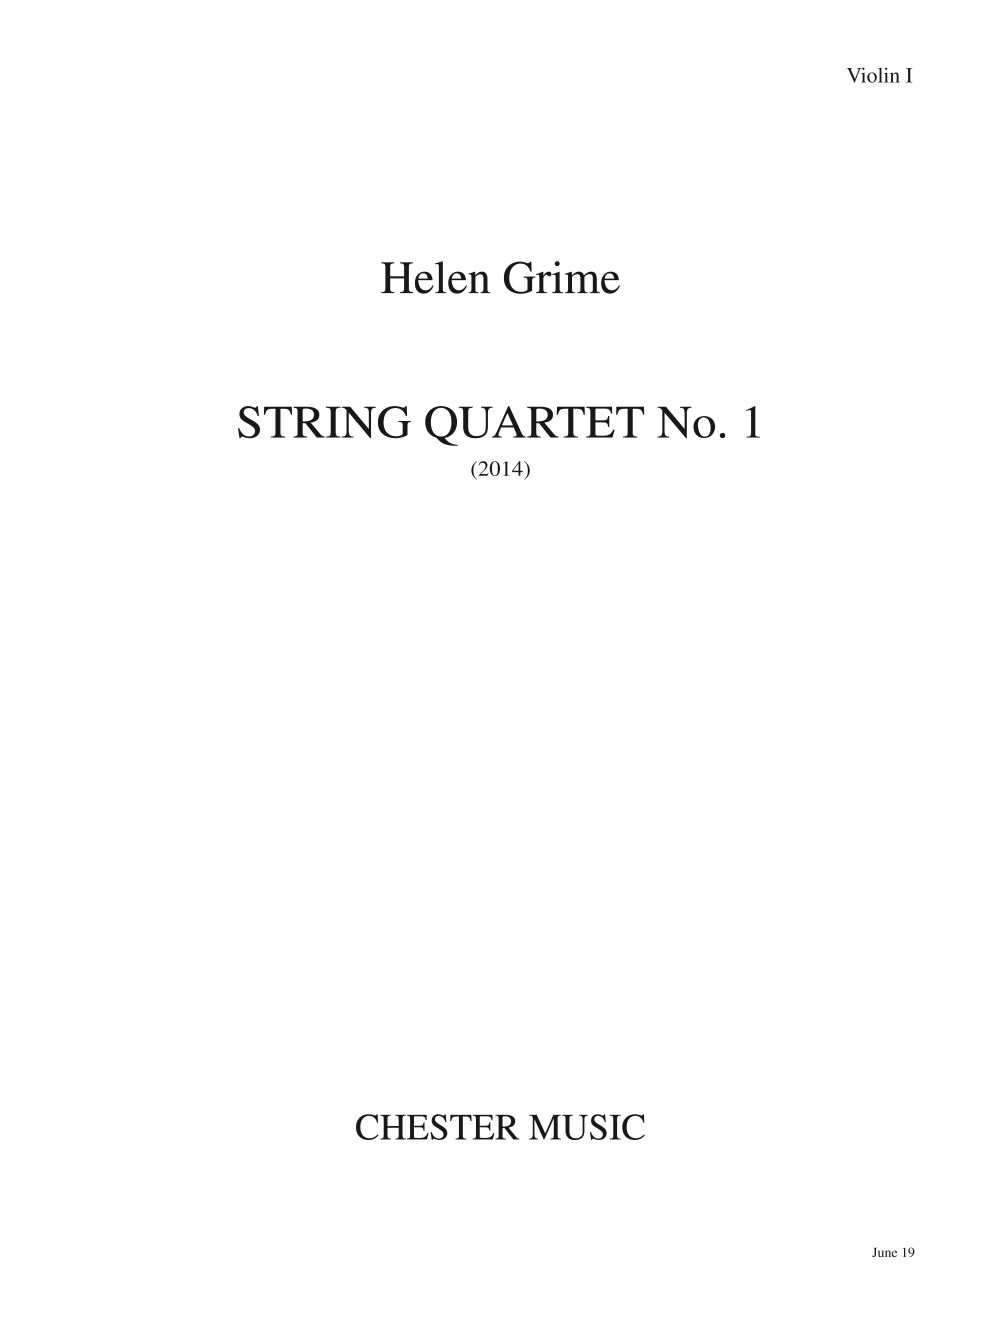 String Quartet No.1 Parts (GRIME HELEN)